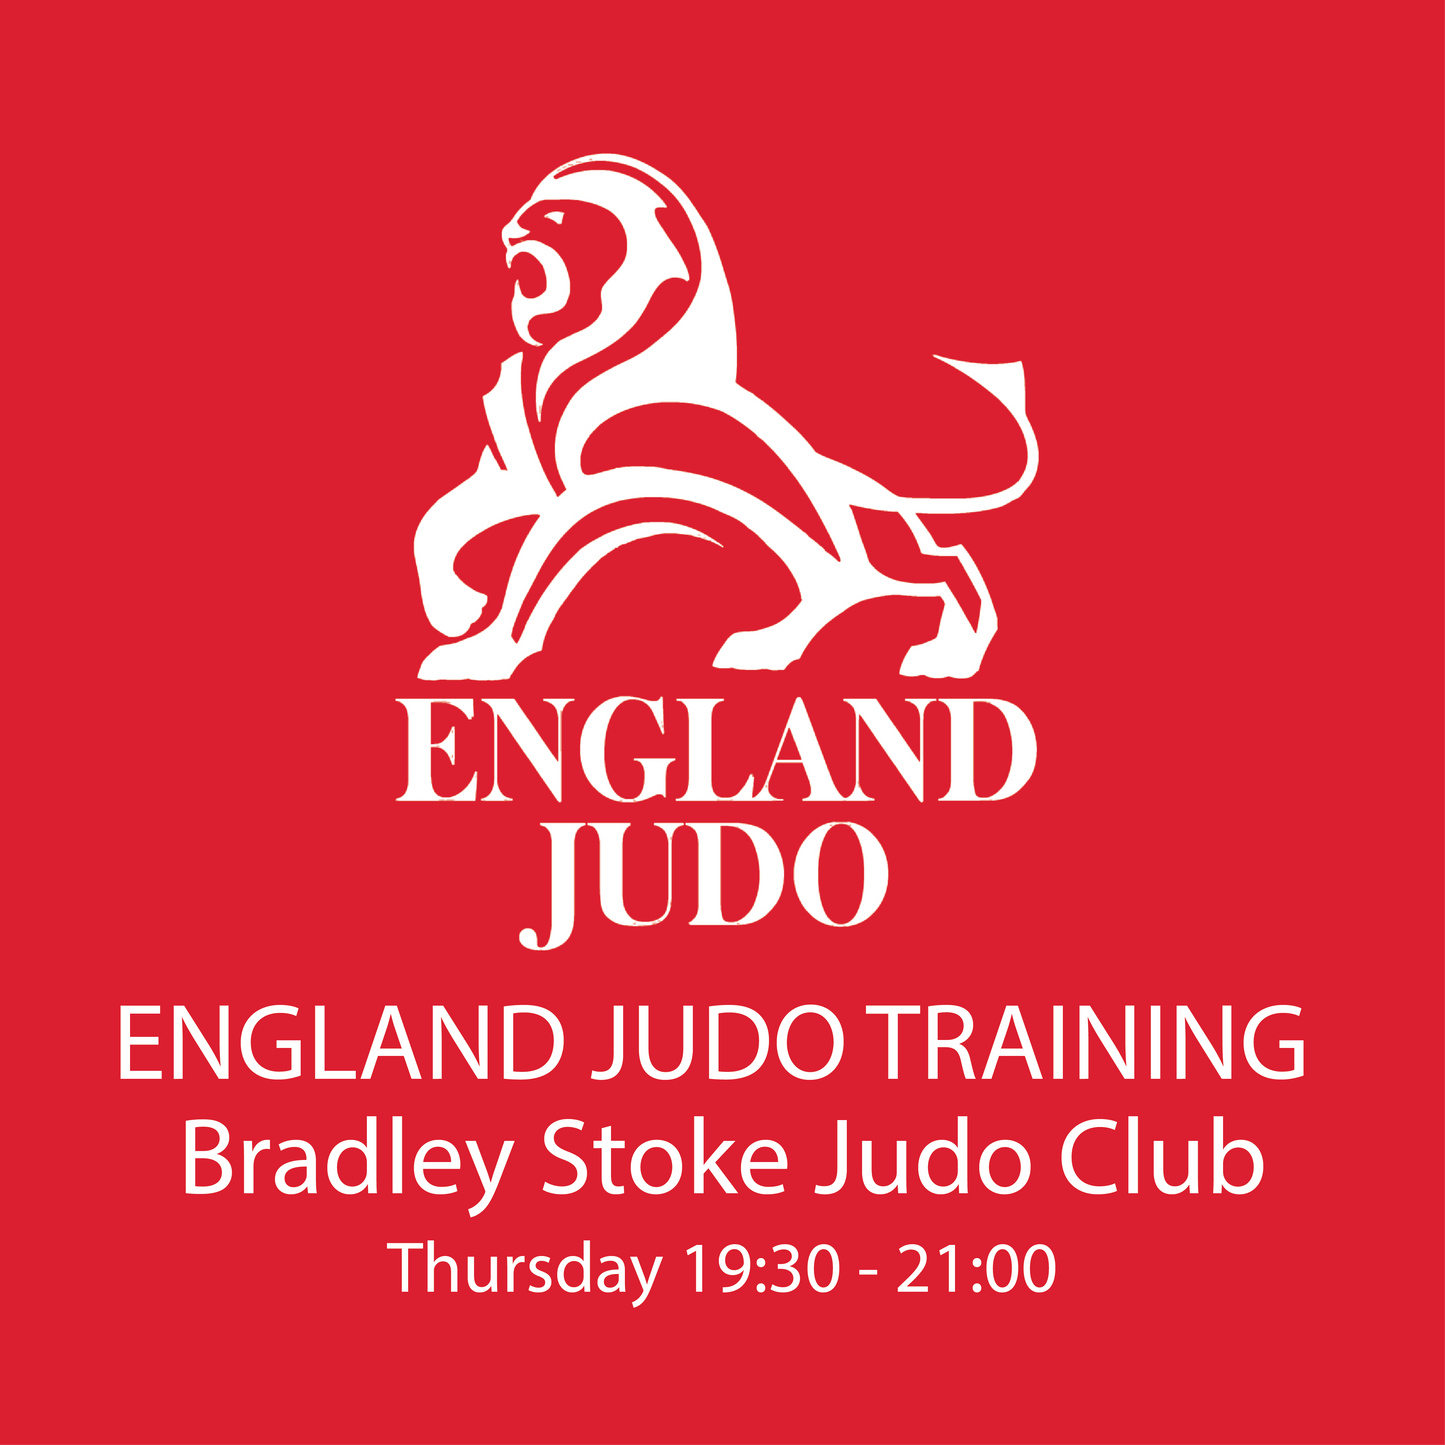 England Judo Training Session